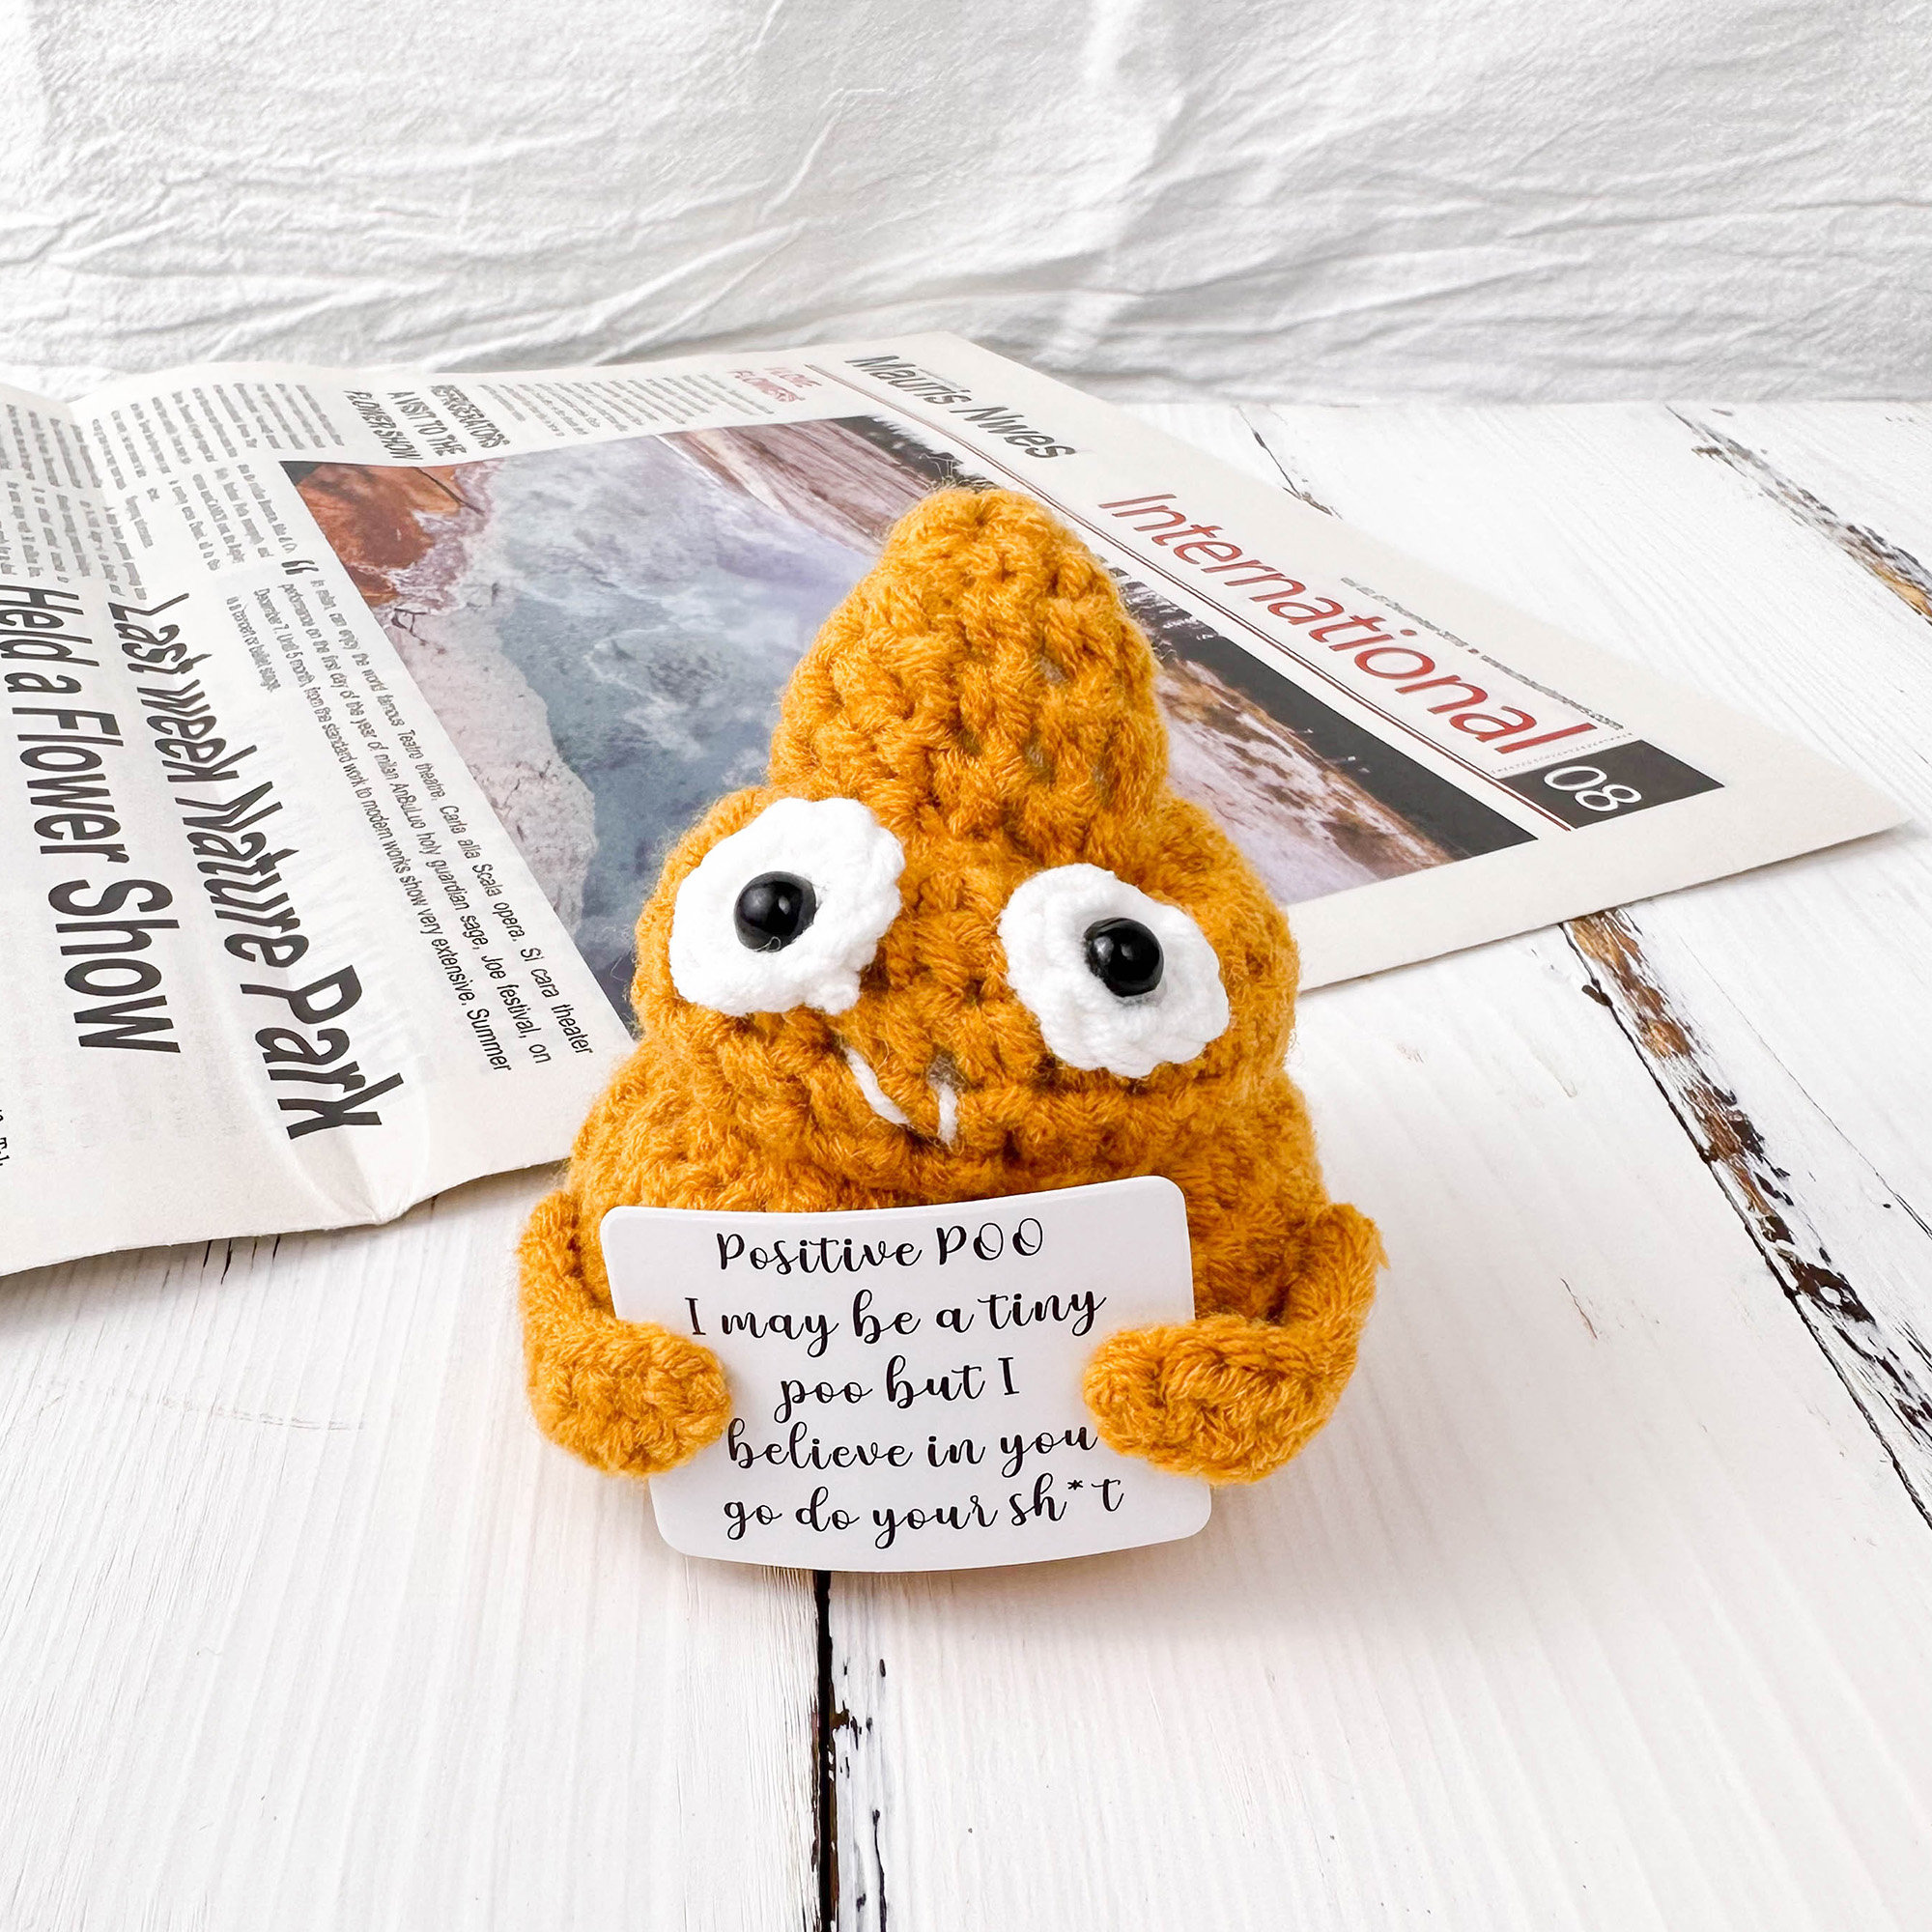 Handmade Emotional Support Pickle With Positive Affirmation, Crochet P –  Potador